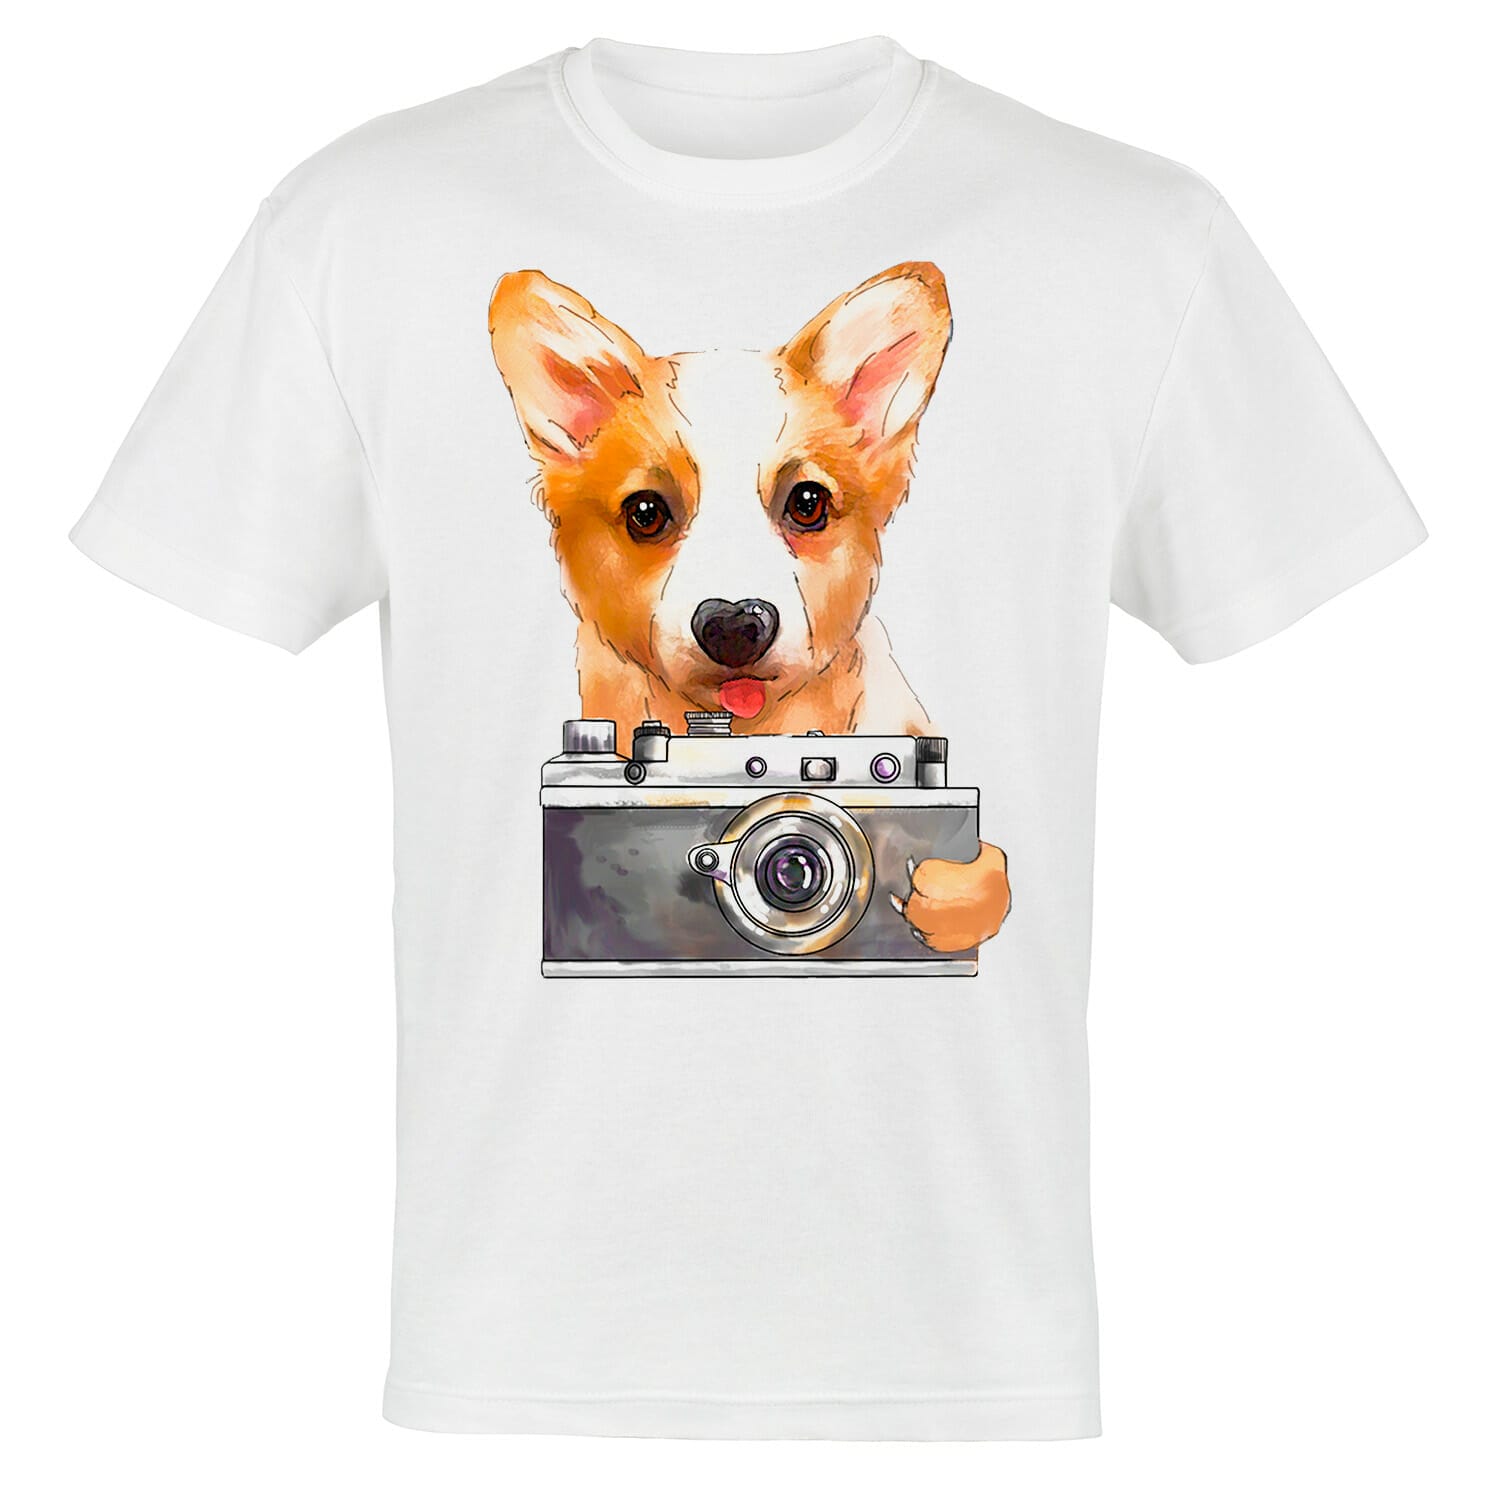 Dog with a camera tshirt design